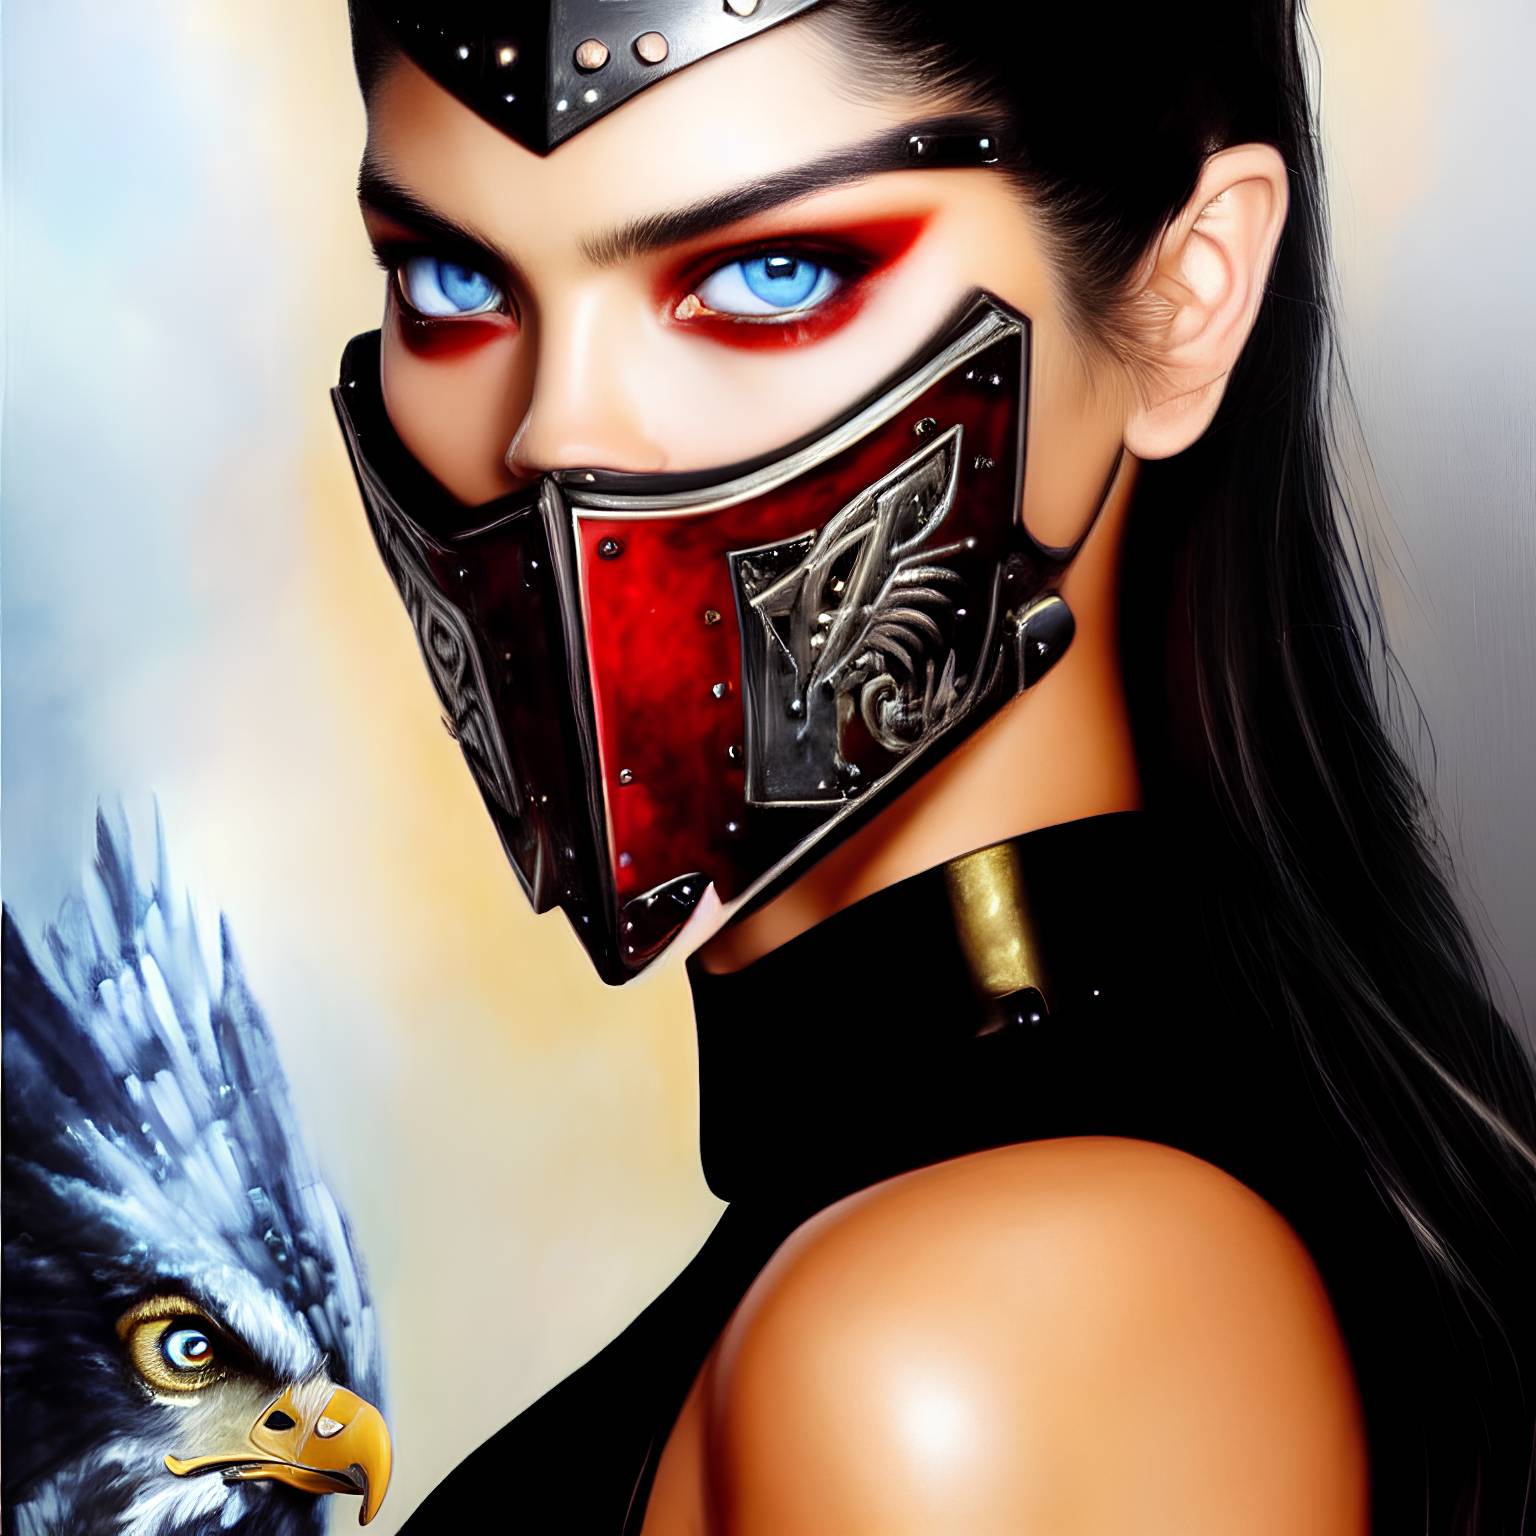 Masked assassins girl by PunkerLazar on DeviantArt